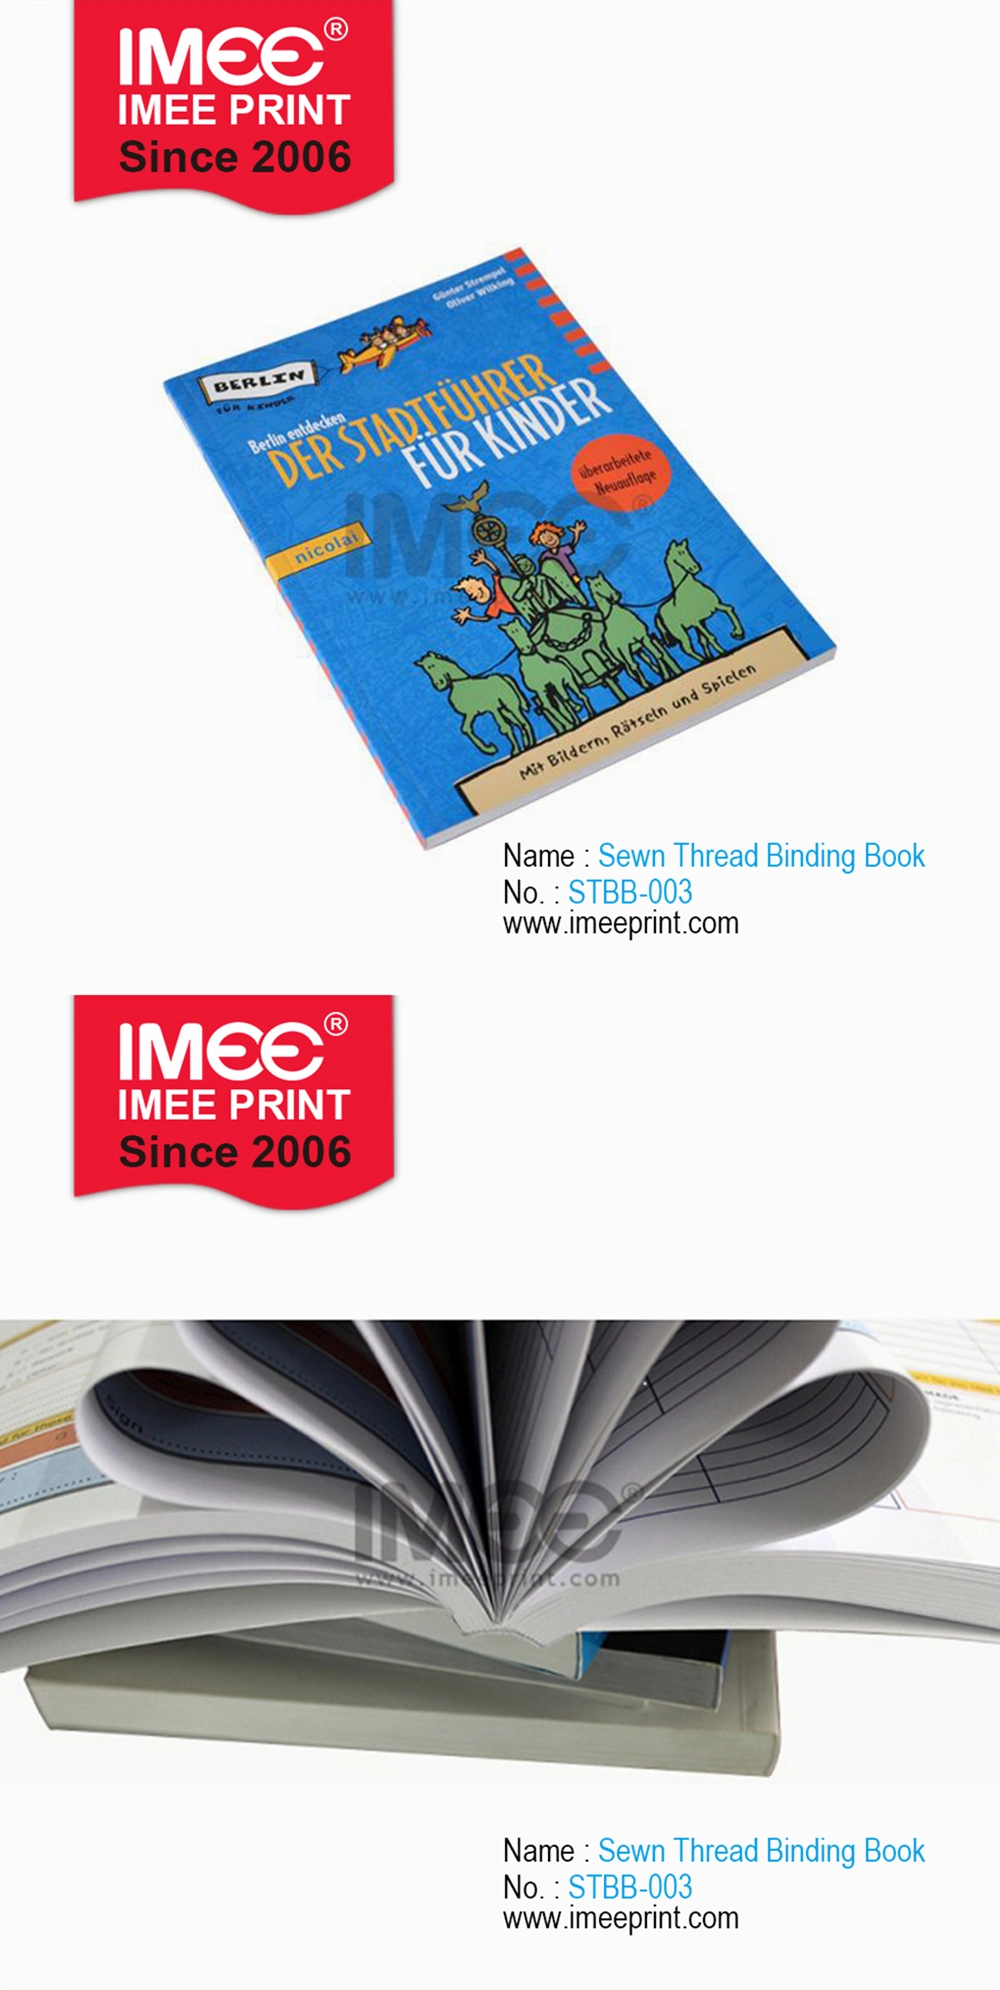 Imee Printing Custom Burst Booklet Softcover Trim Tab Sewn Thread Binding Book